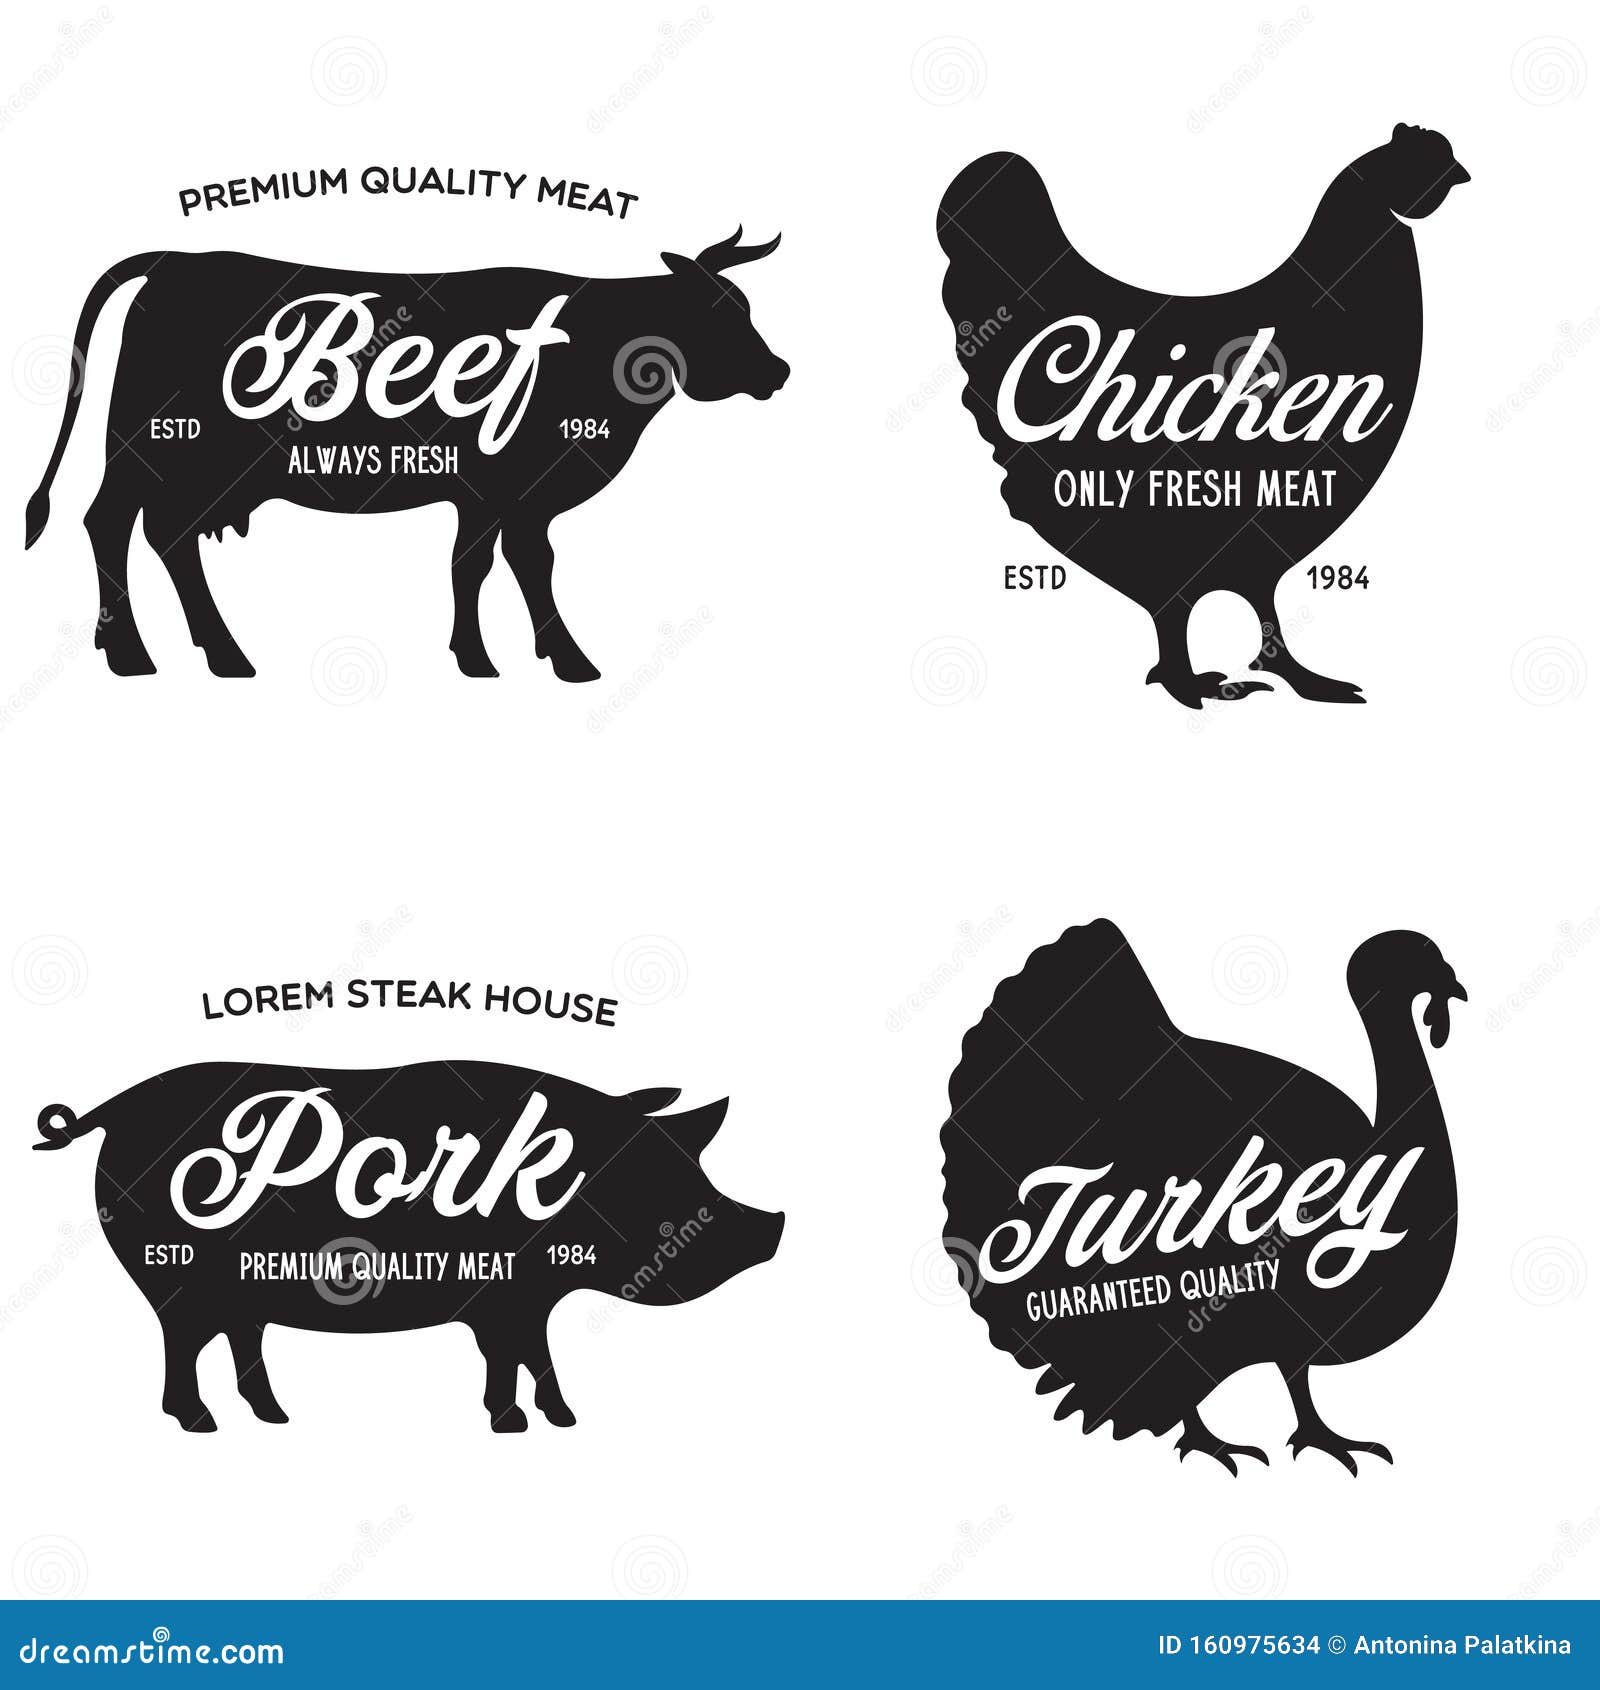 Farm Animals Icons Set. Collection of Labels with Beef, Chicken, Pork,  Turkey, Butcher Shop, Steak House Stock Illustration - Illustration of  design, pork: 160975634